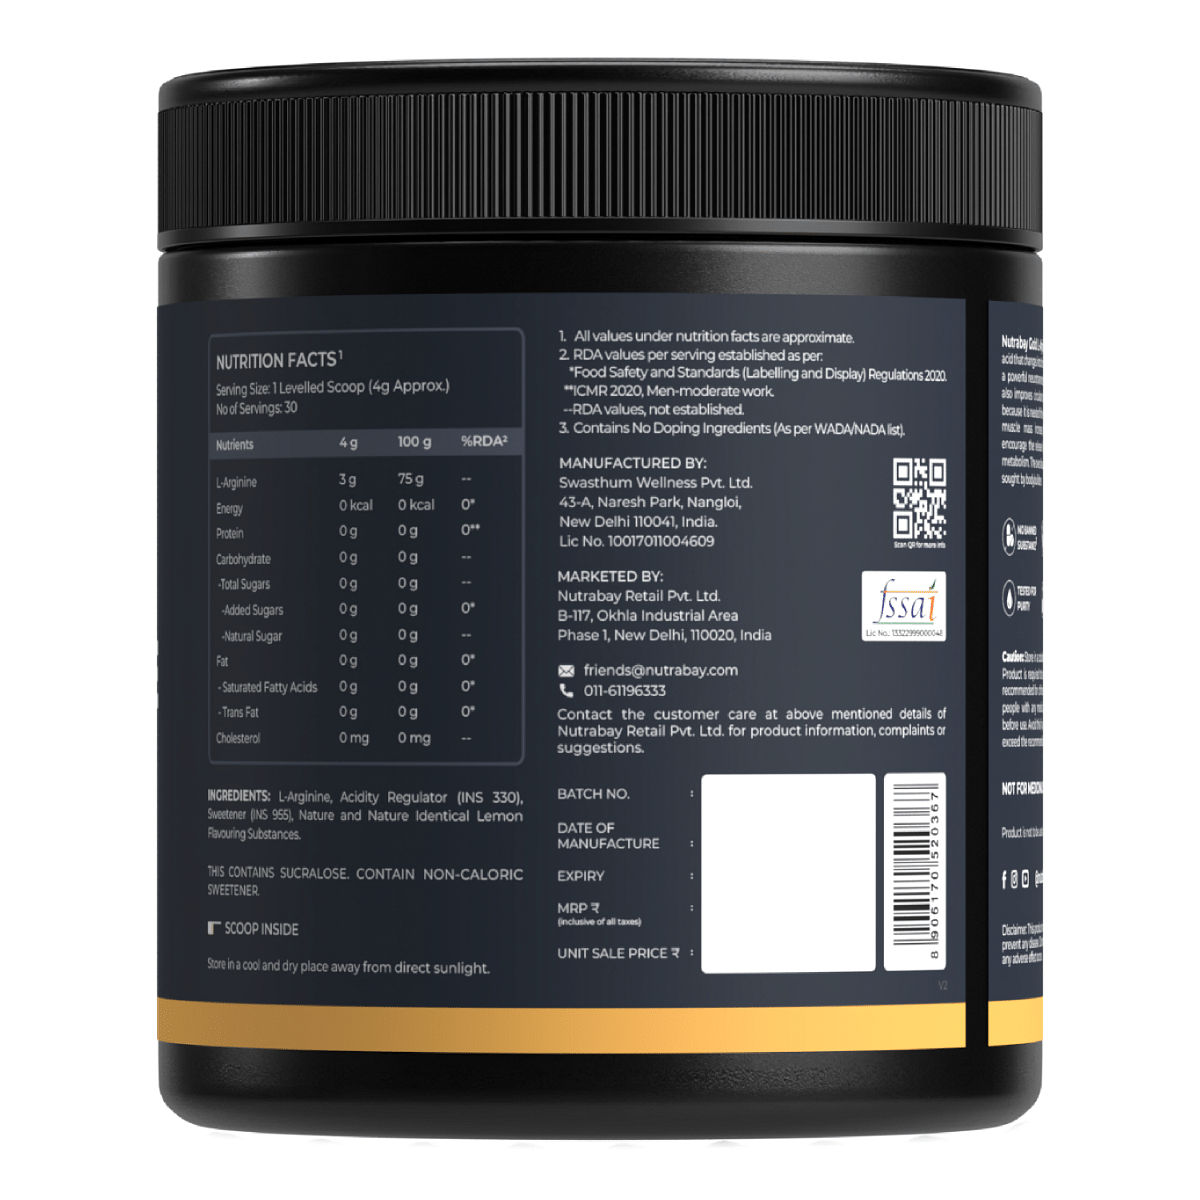 Nutrabay Gold L-Arginine Supplement Powder - 120g Lemon Flavor  Pre Workout Amino Acid for Endurance Muscle Building  Faster Recovery